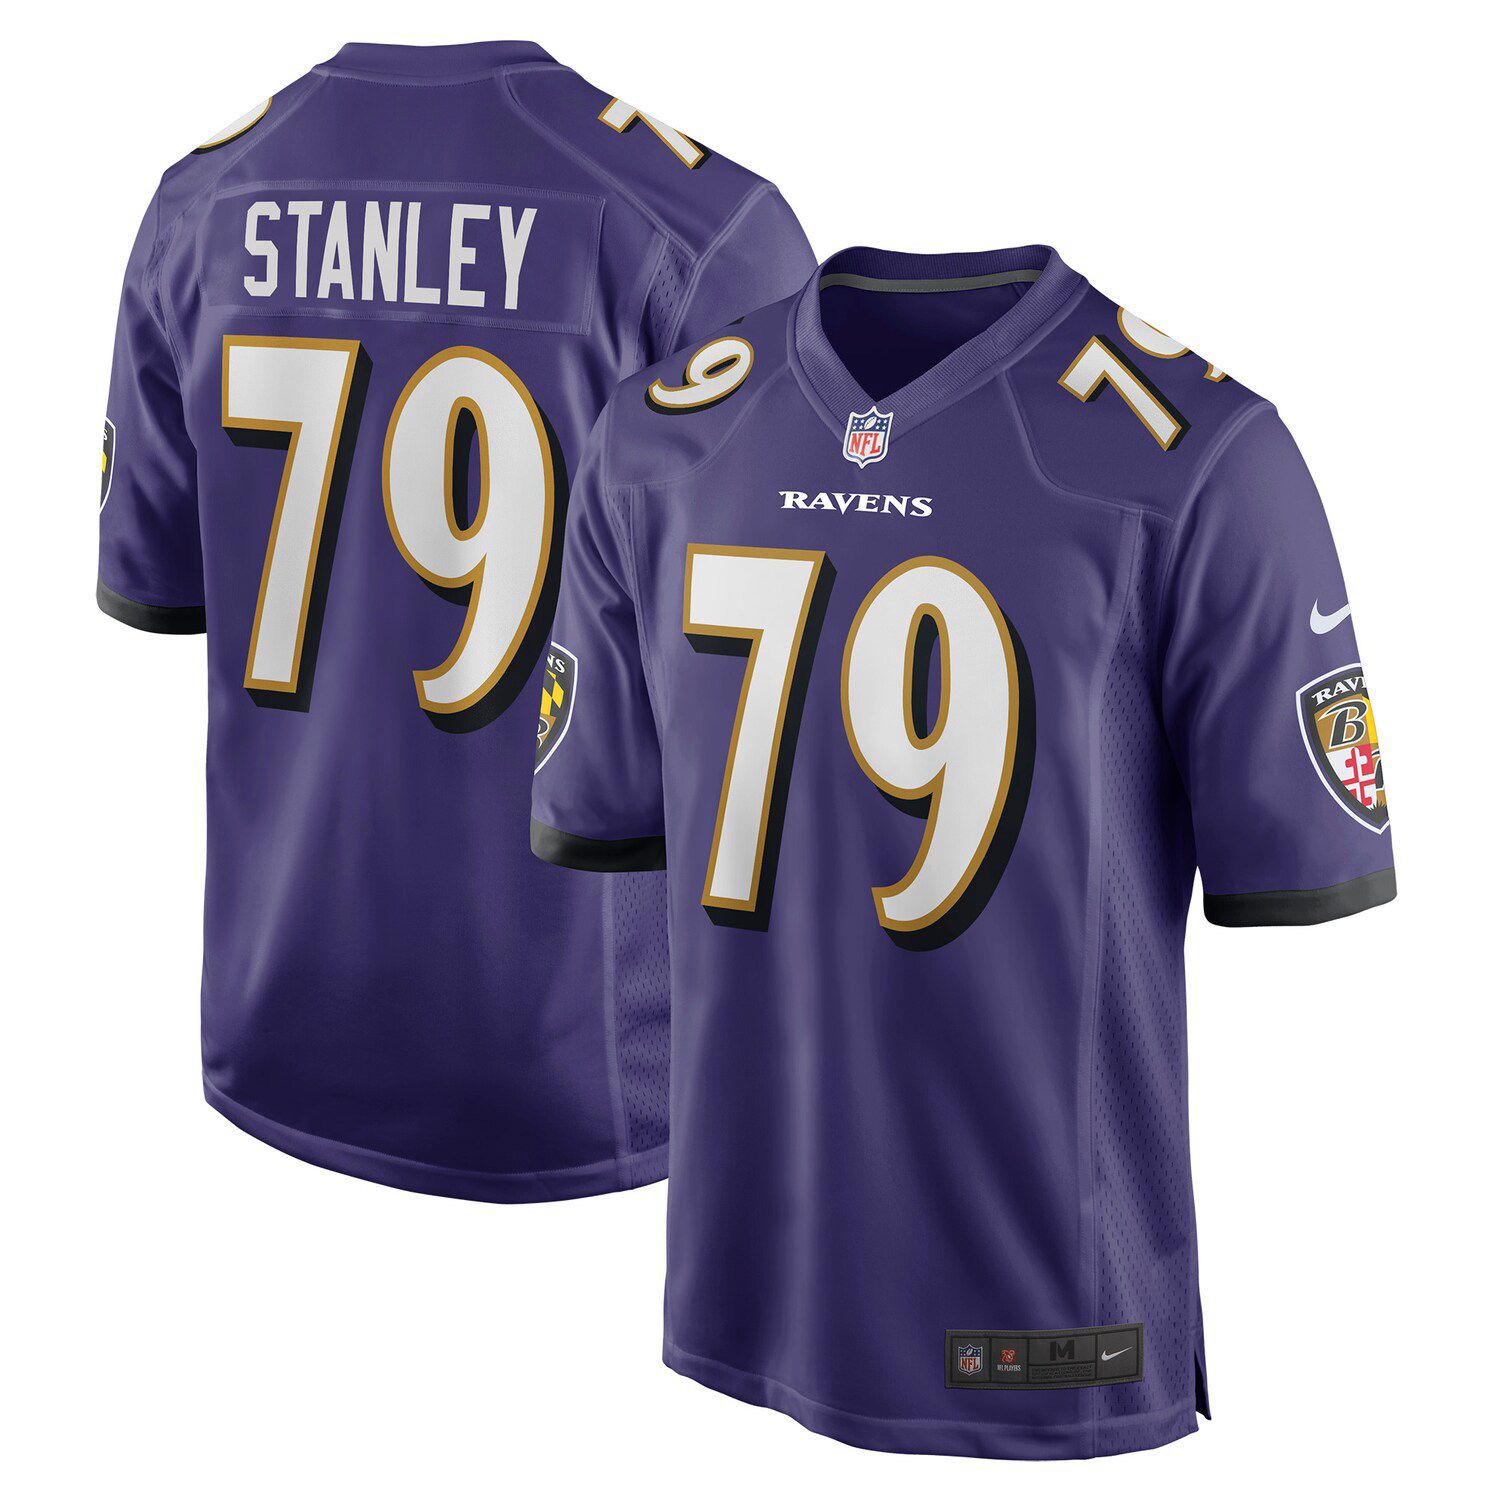 Ronnie Stanley Baltimore jersey